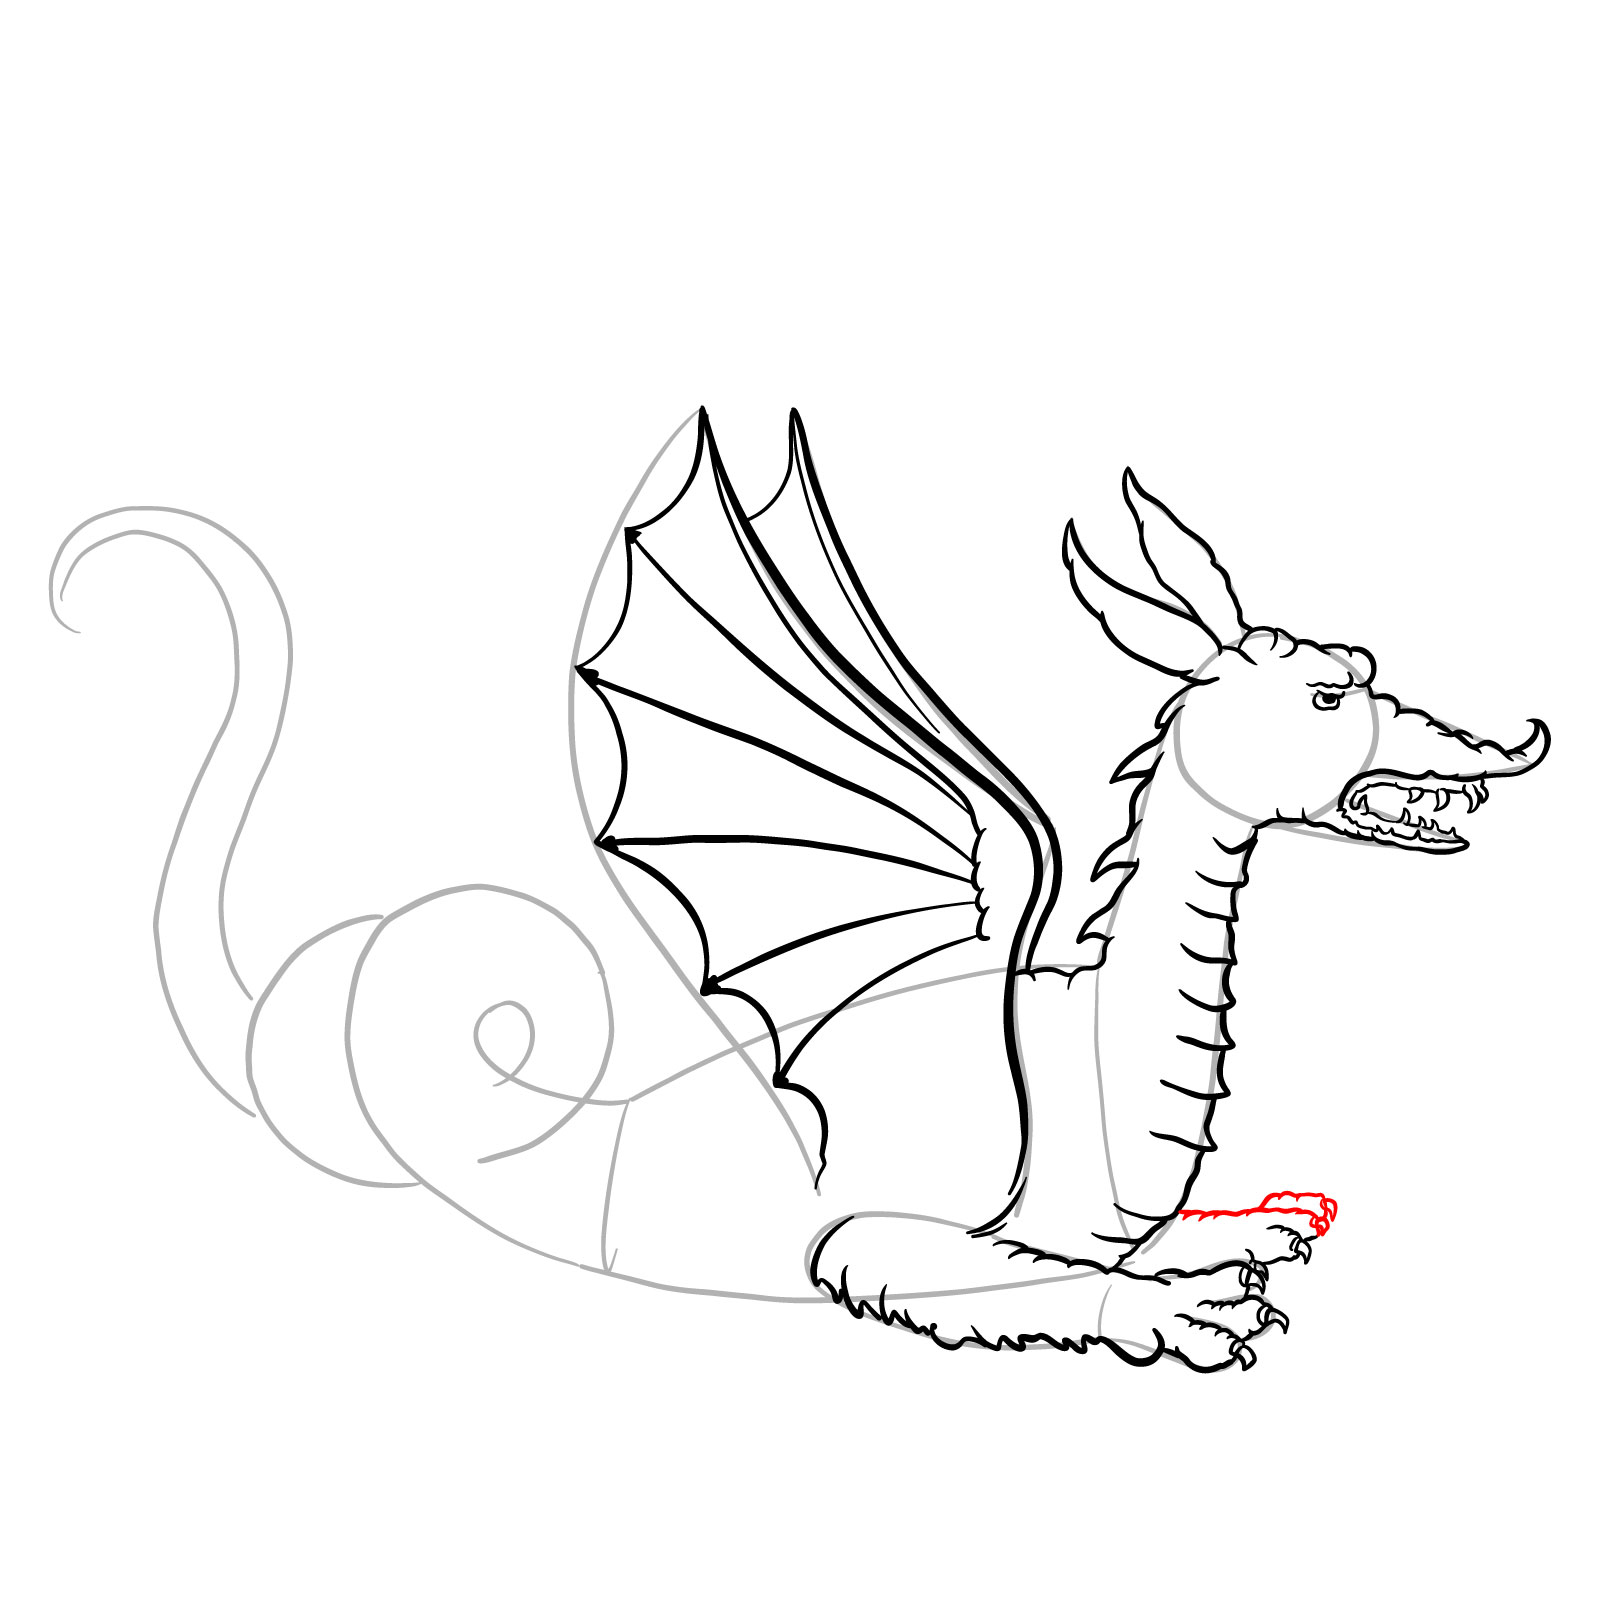 How to draw a Knucker dragon - step 24